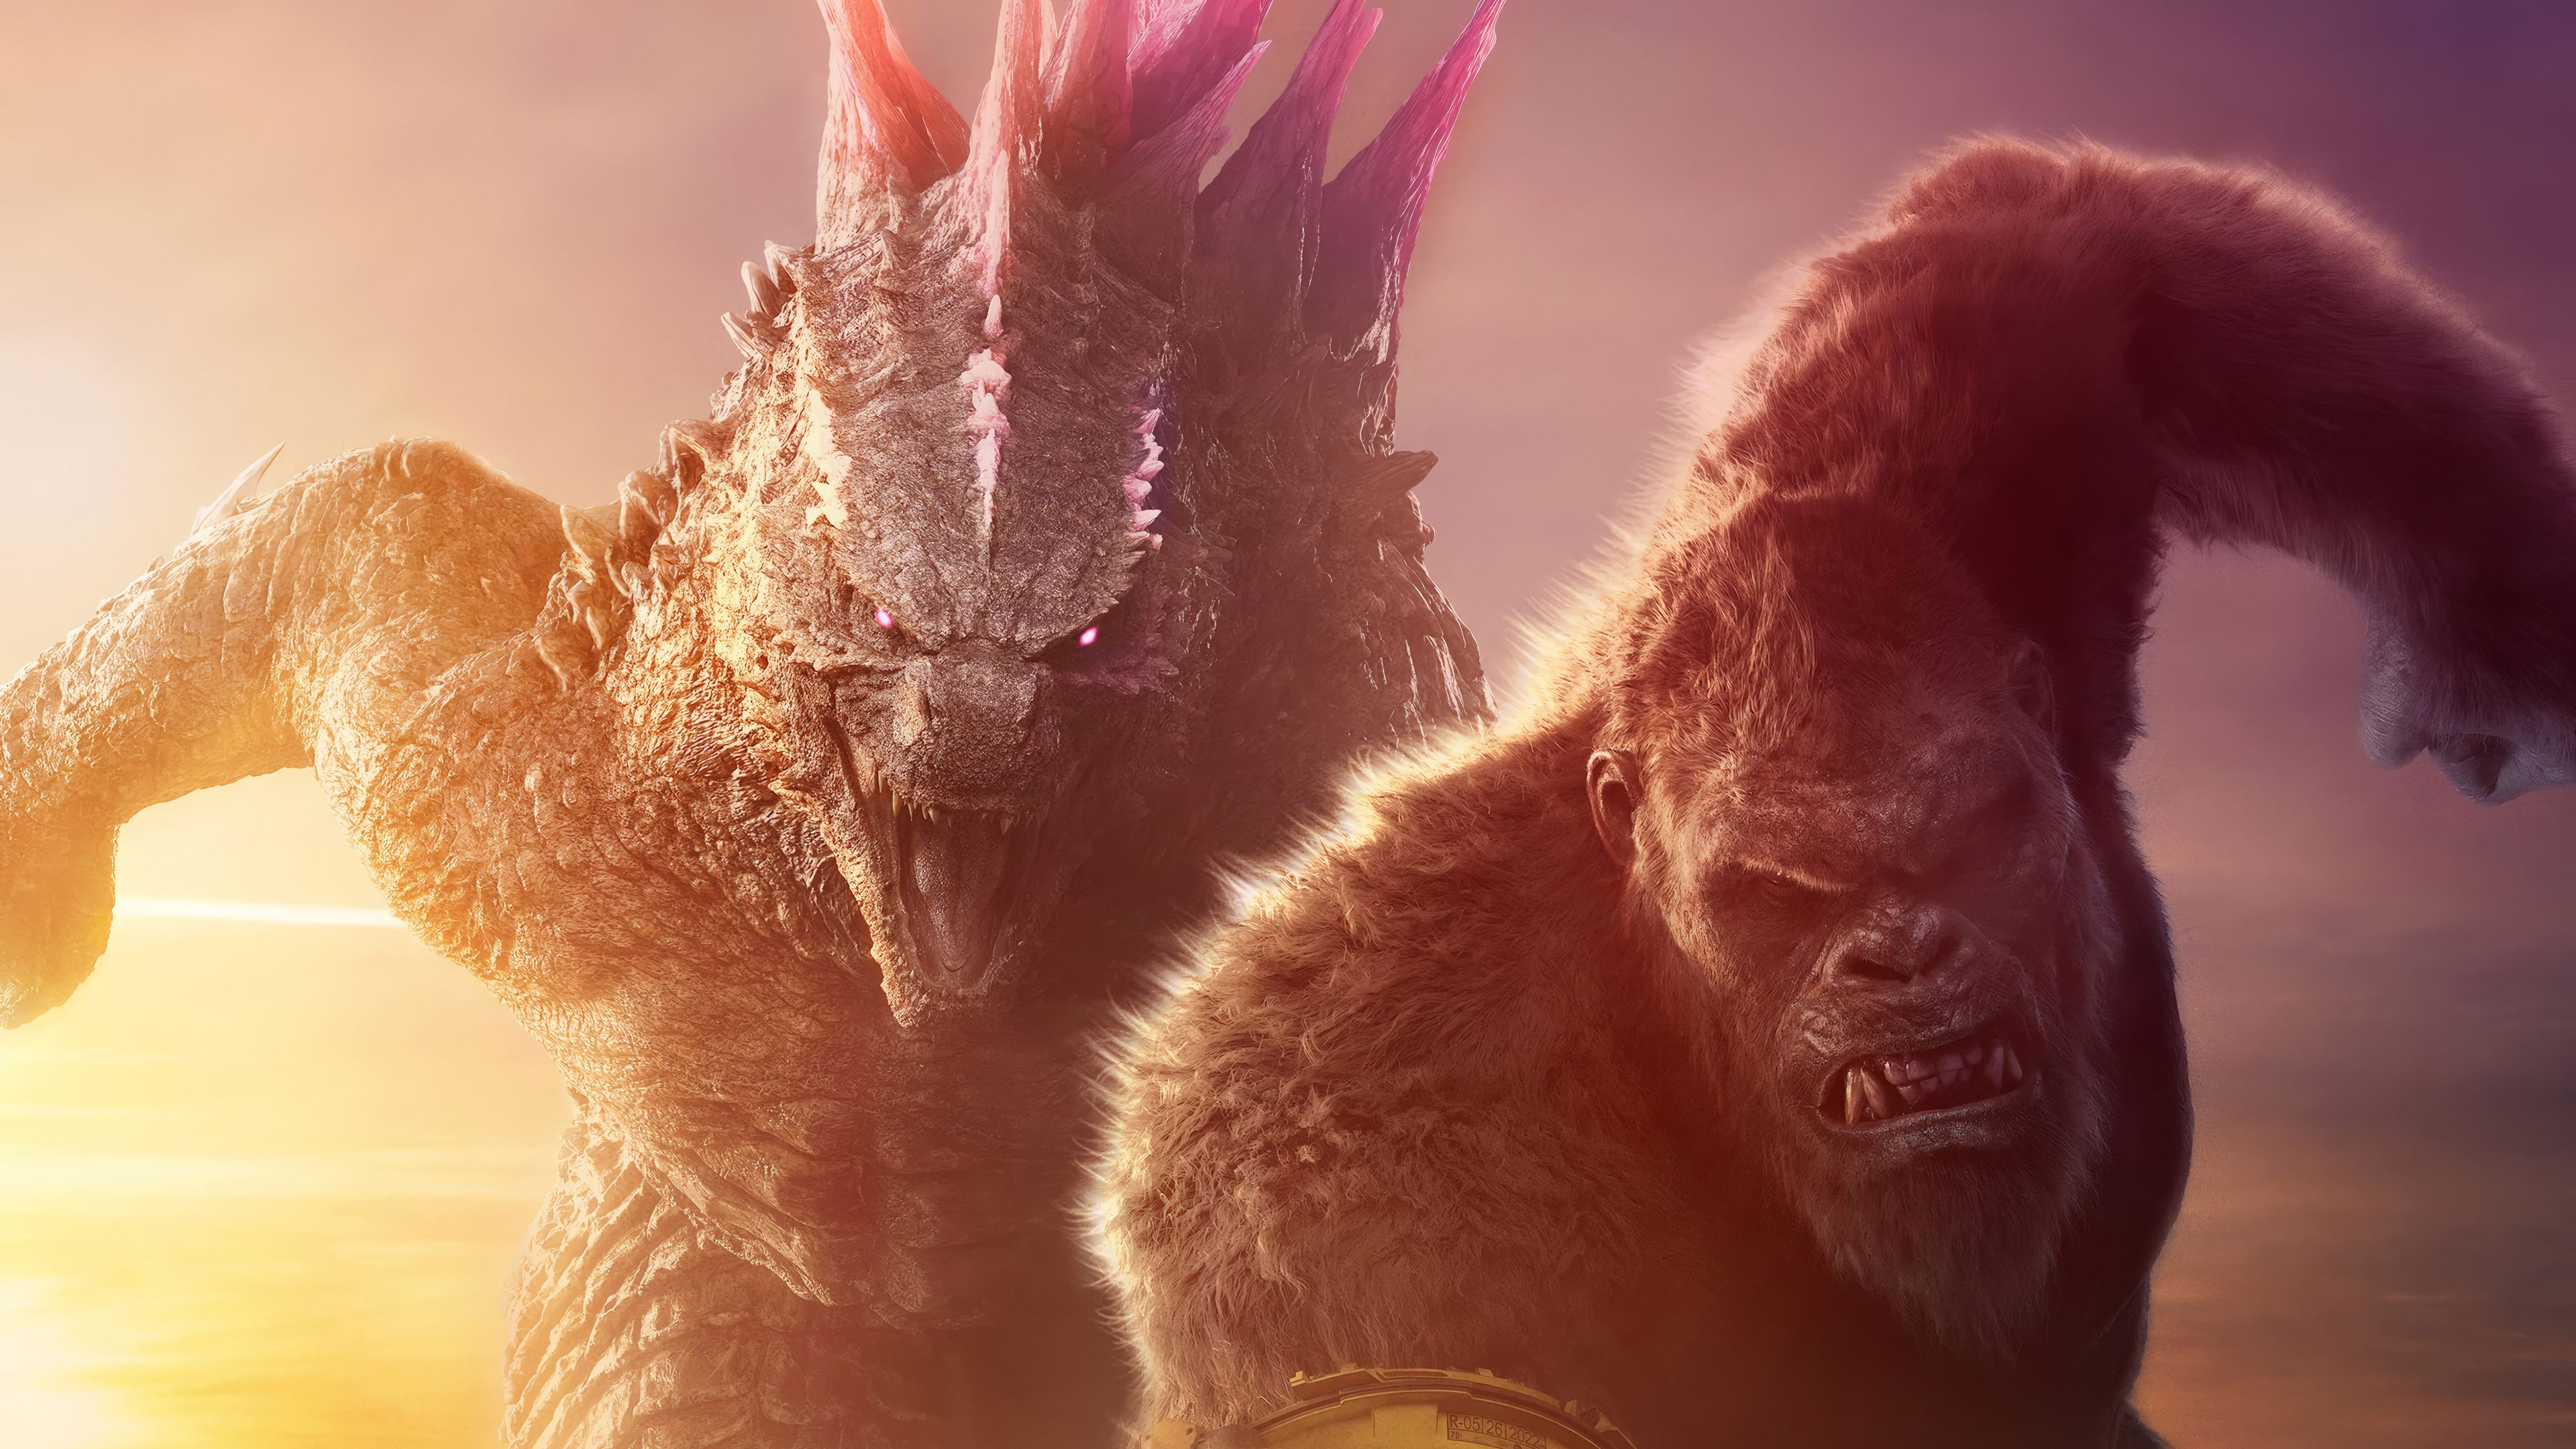 Godzilla x Kong - A New Empire